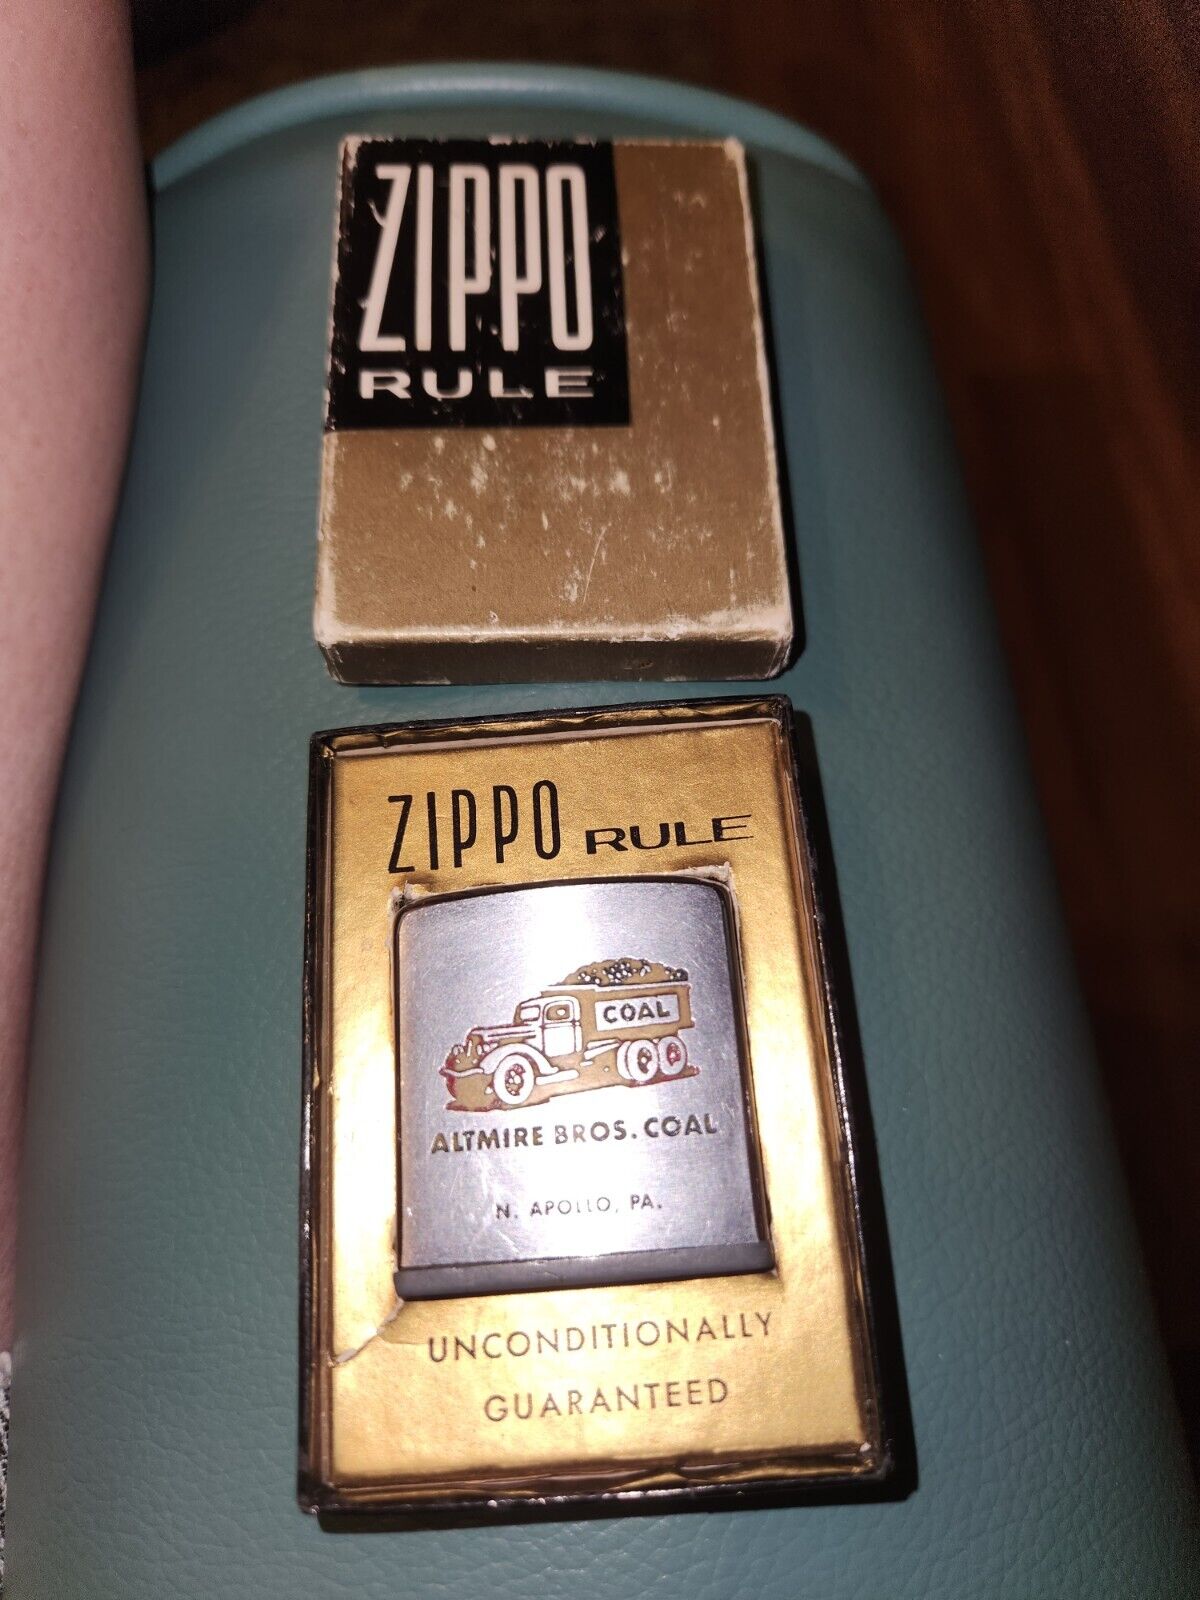 Vintage Zippo Rule tape measure.  original box. Altmire Bros. Coal N. Apollo PA